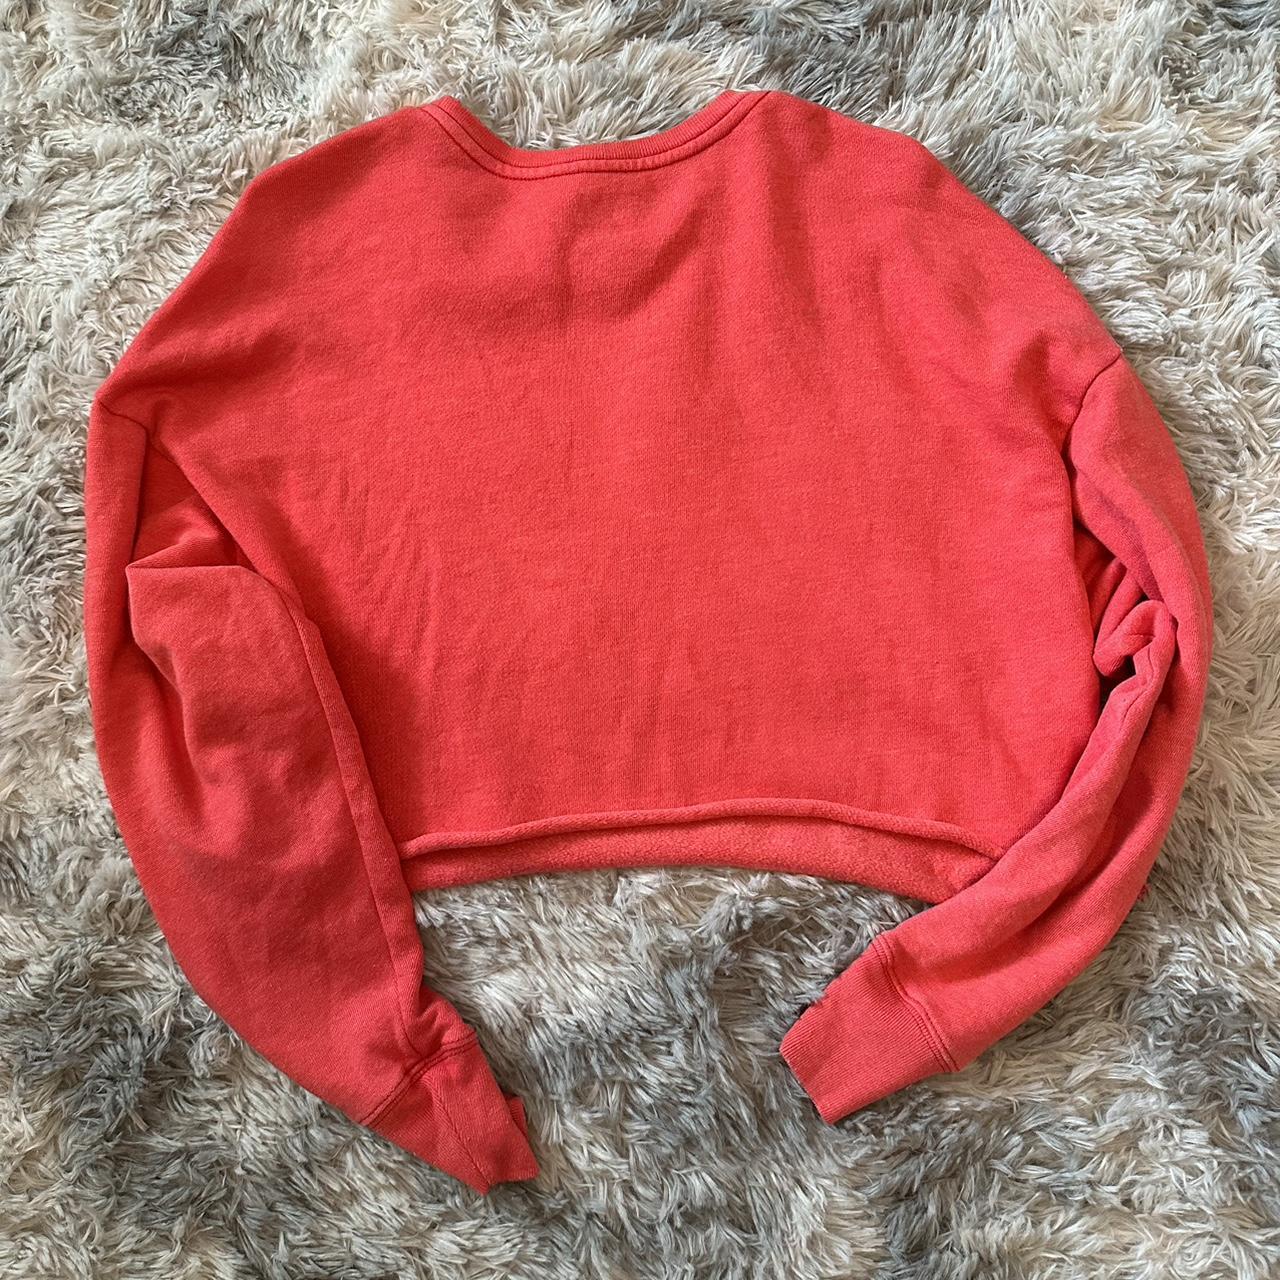 Bogs Women's Pink and Red Sweatshirt (2)